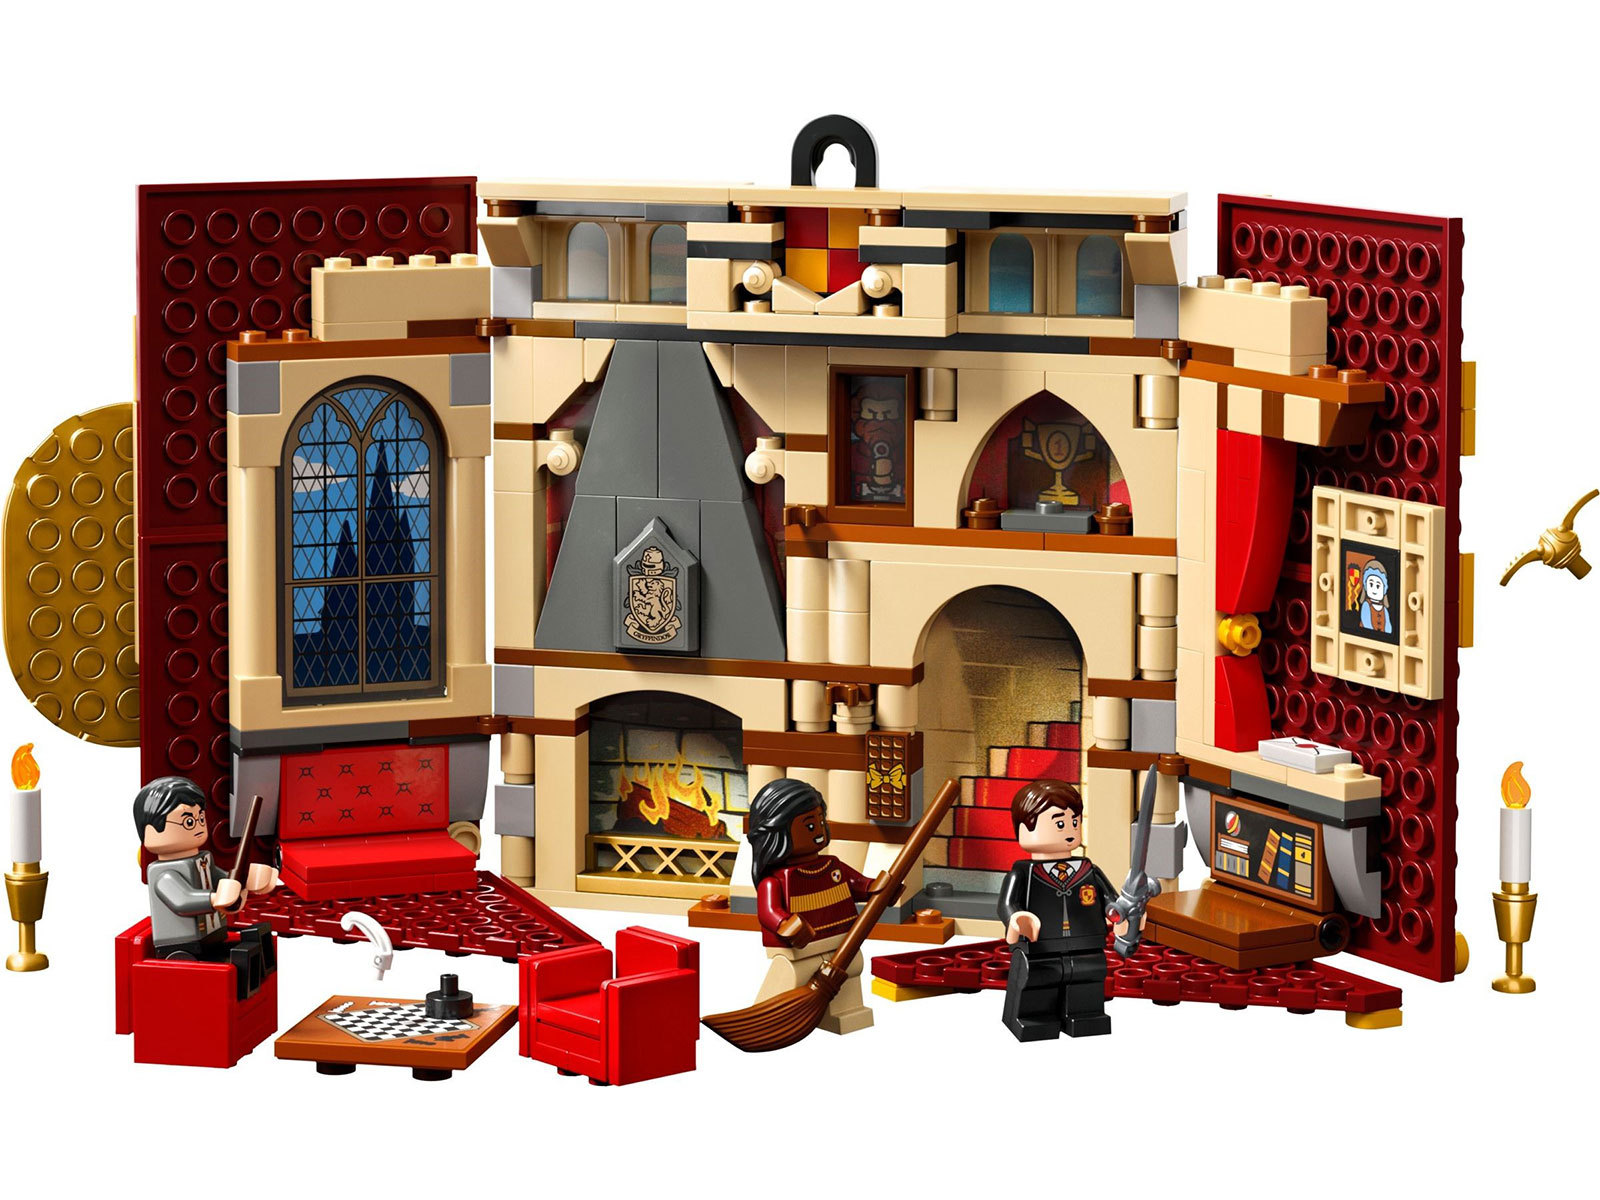 LEGO® Harry Potter™ 76409 - Hausbanner Gryffindor™